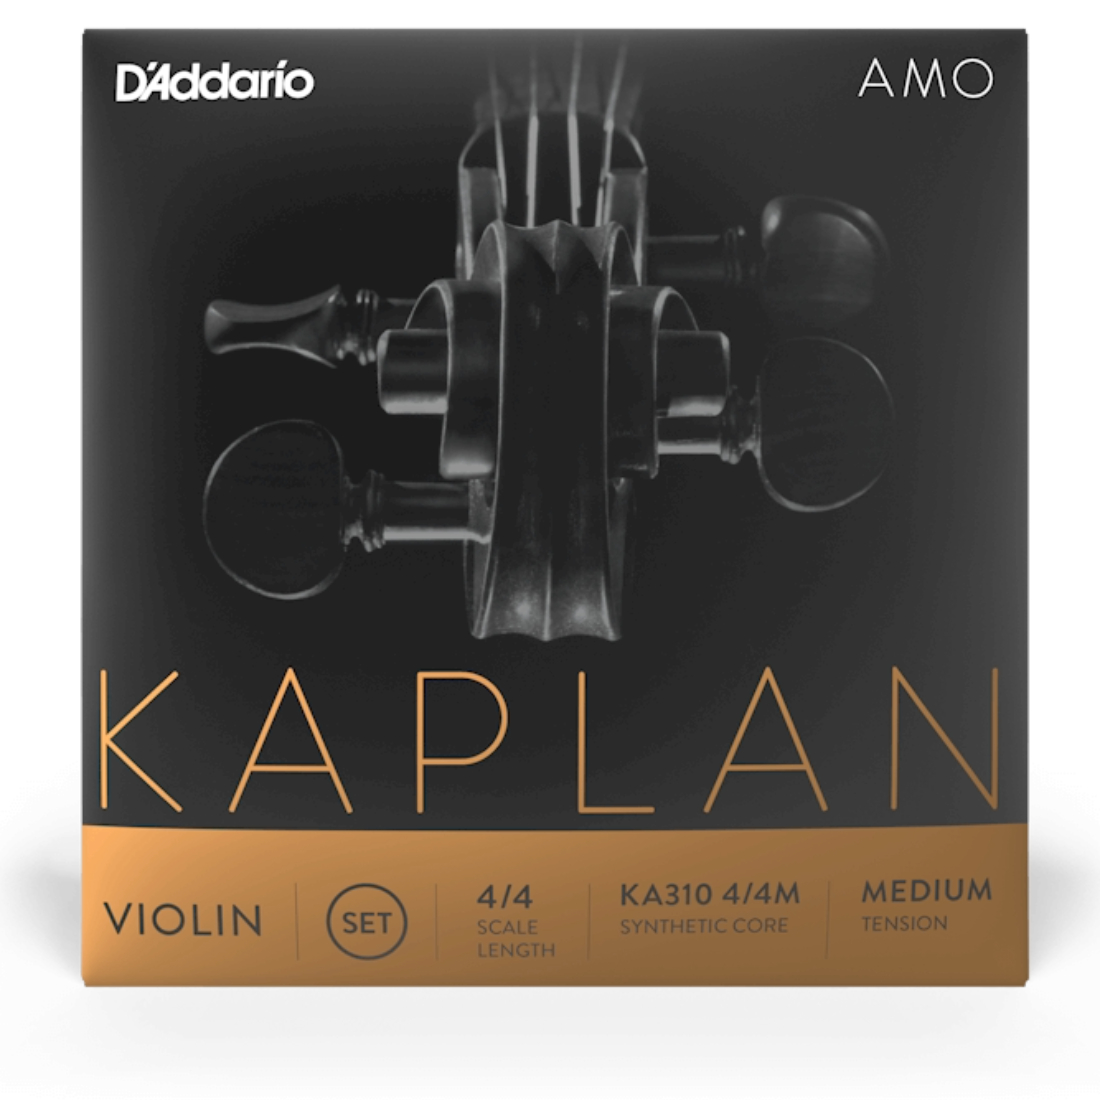 Black and gold box of Kaplan Amo violin strings